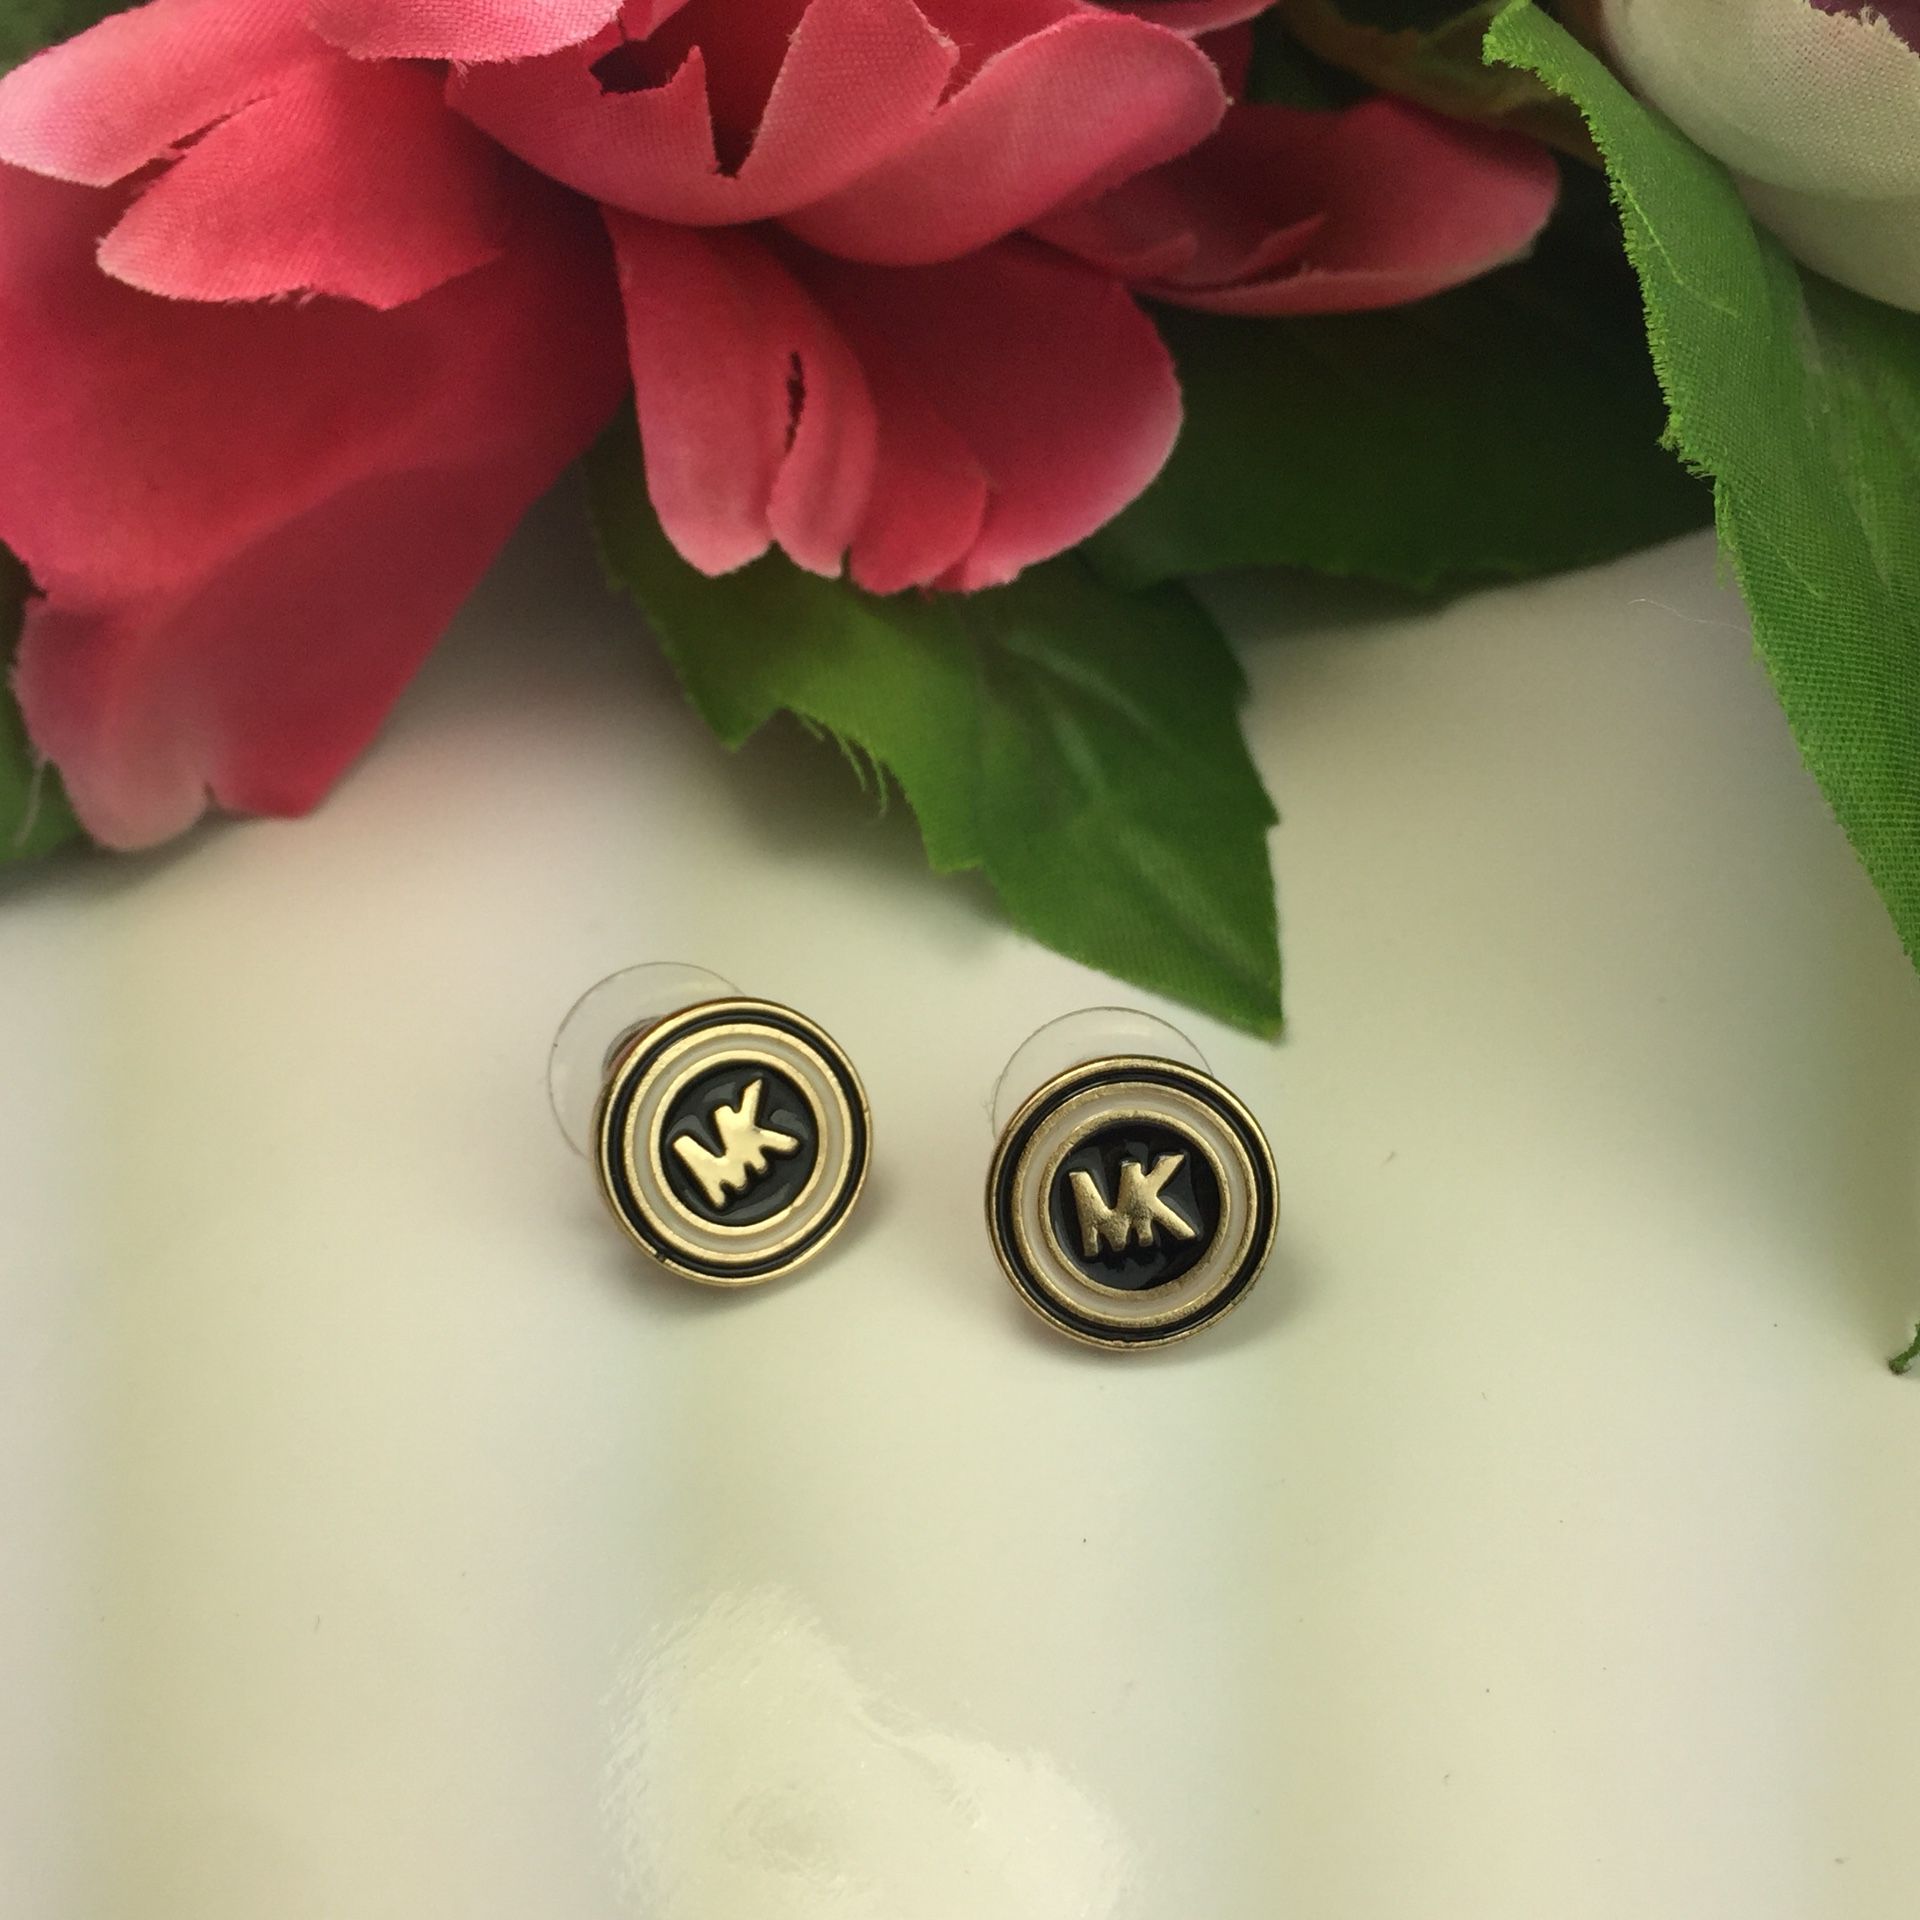 Mk Michael Kors studs round earrings women’s jewelry accessory Christmas gift